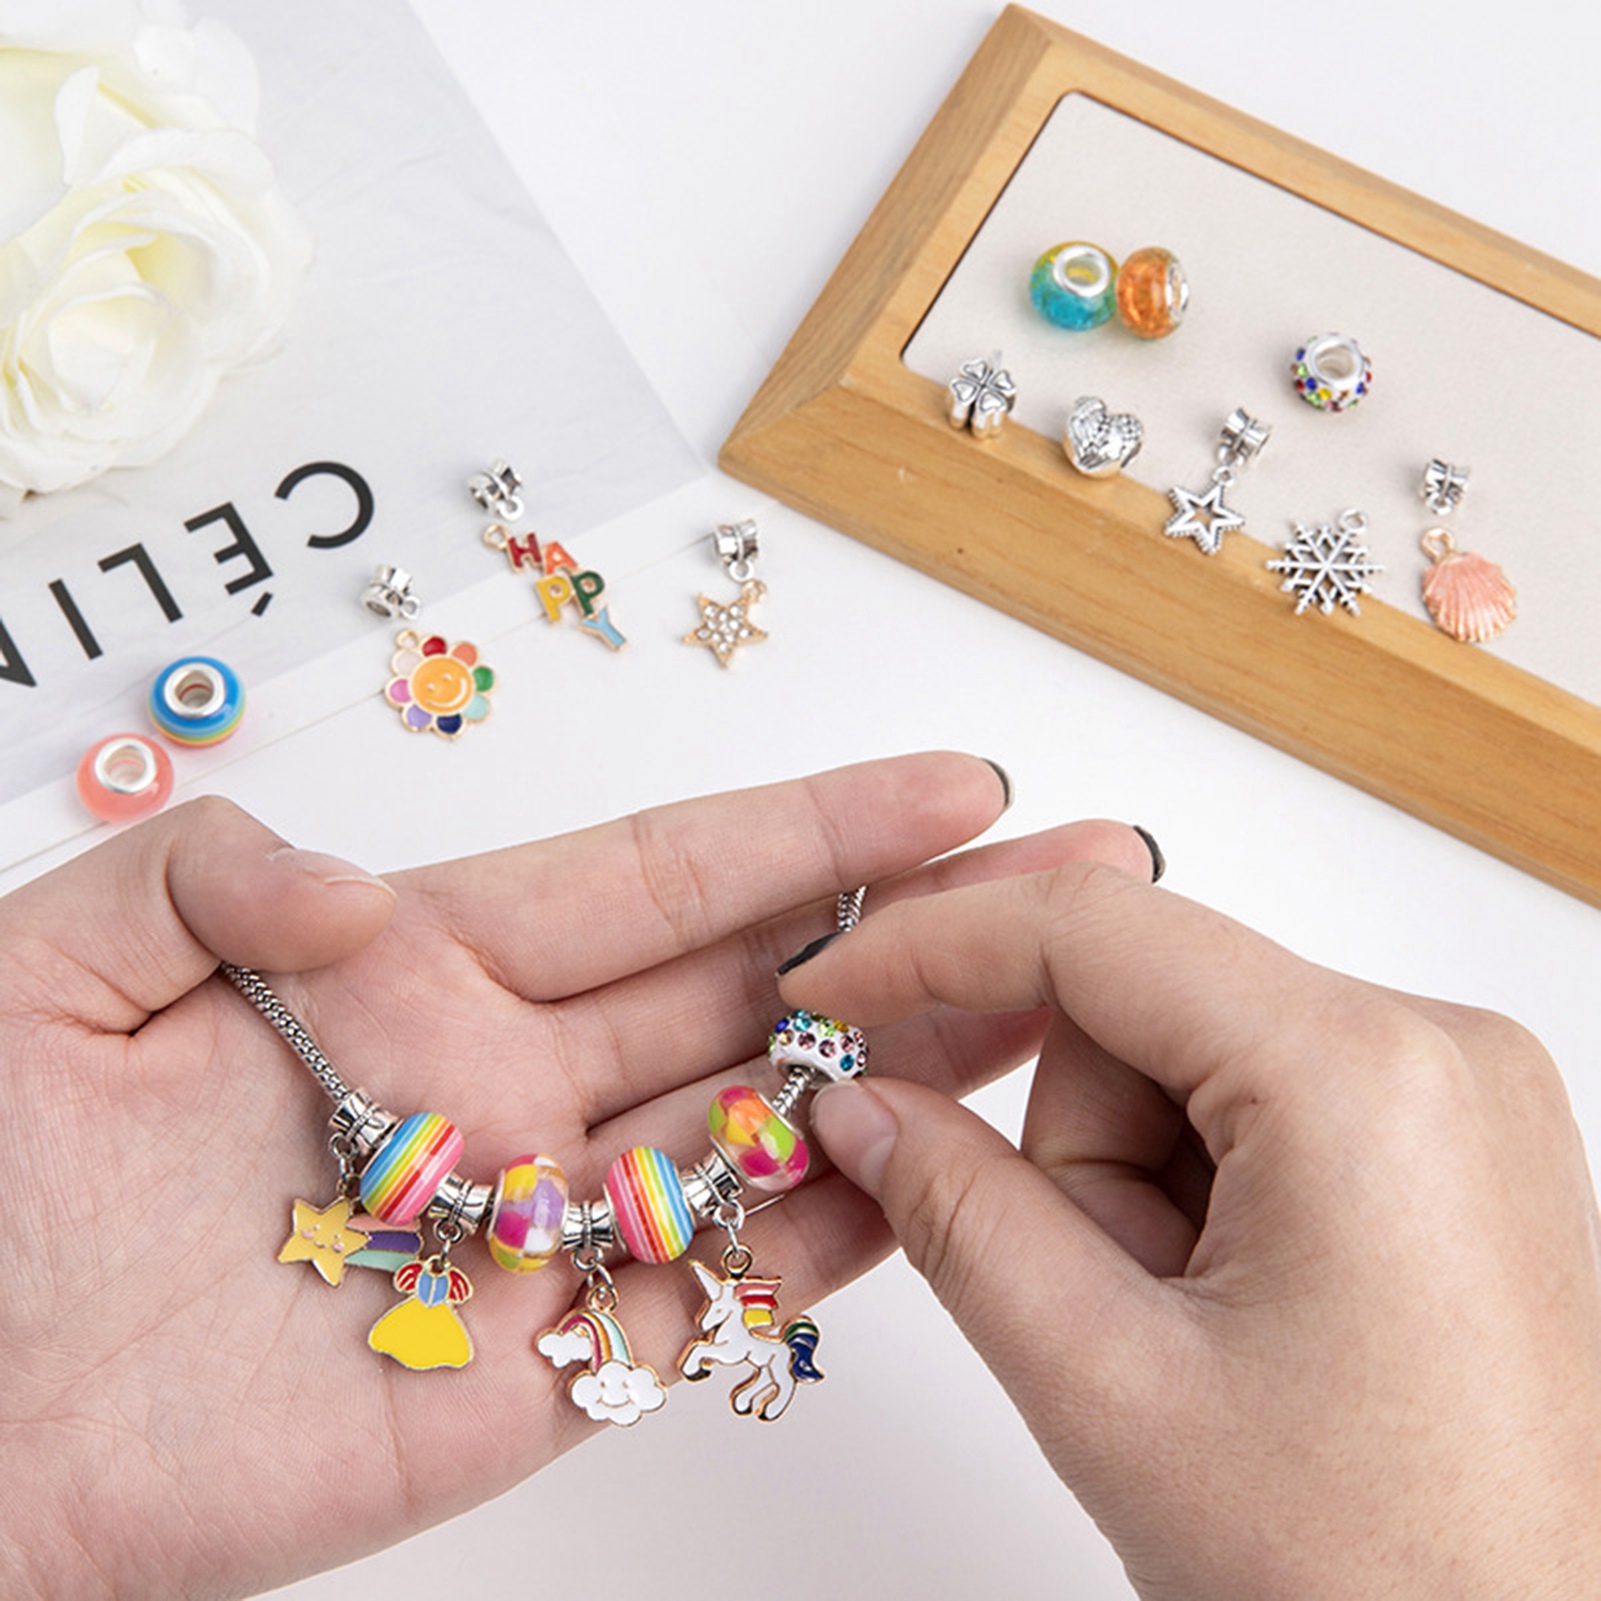 DraggmePartty Unicorn Girl Gift Jewelry Making Kit - Kids Toys Art